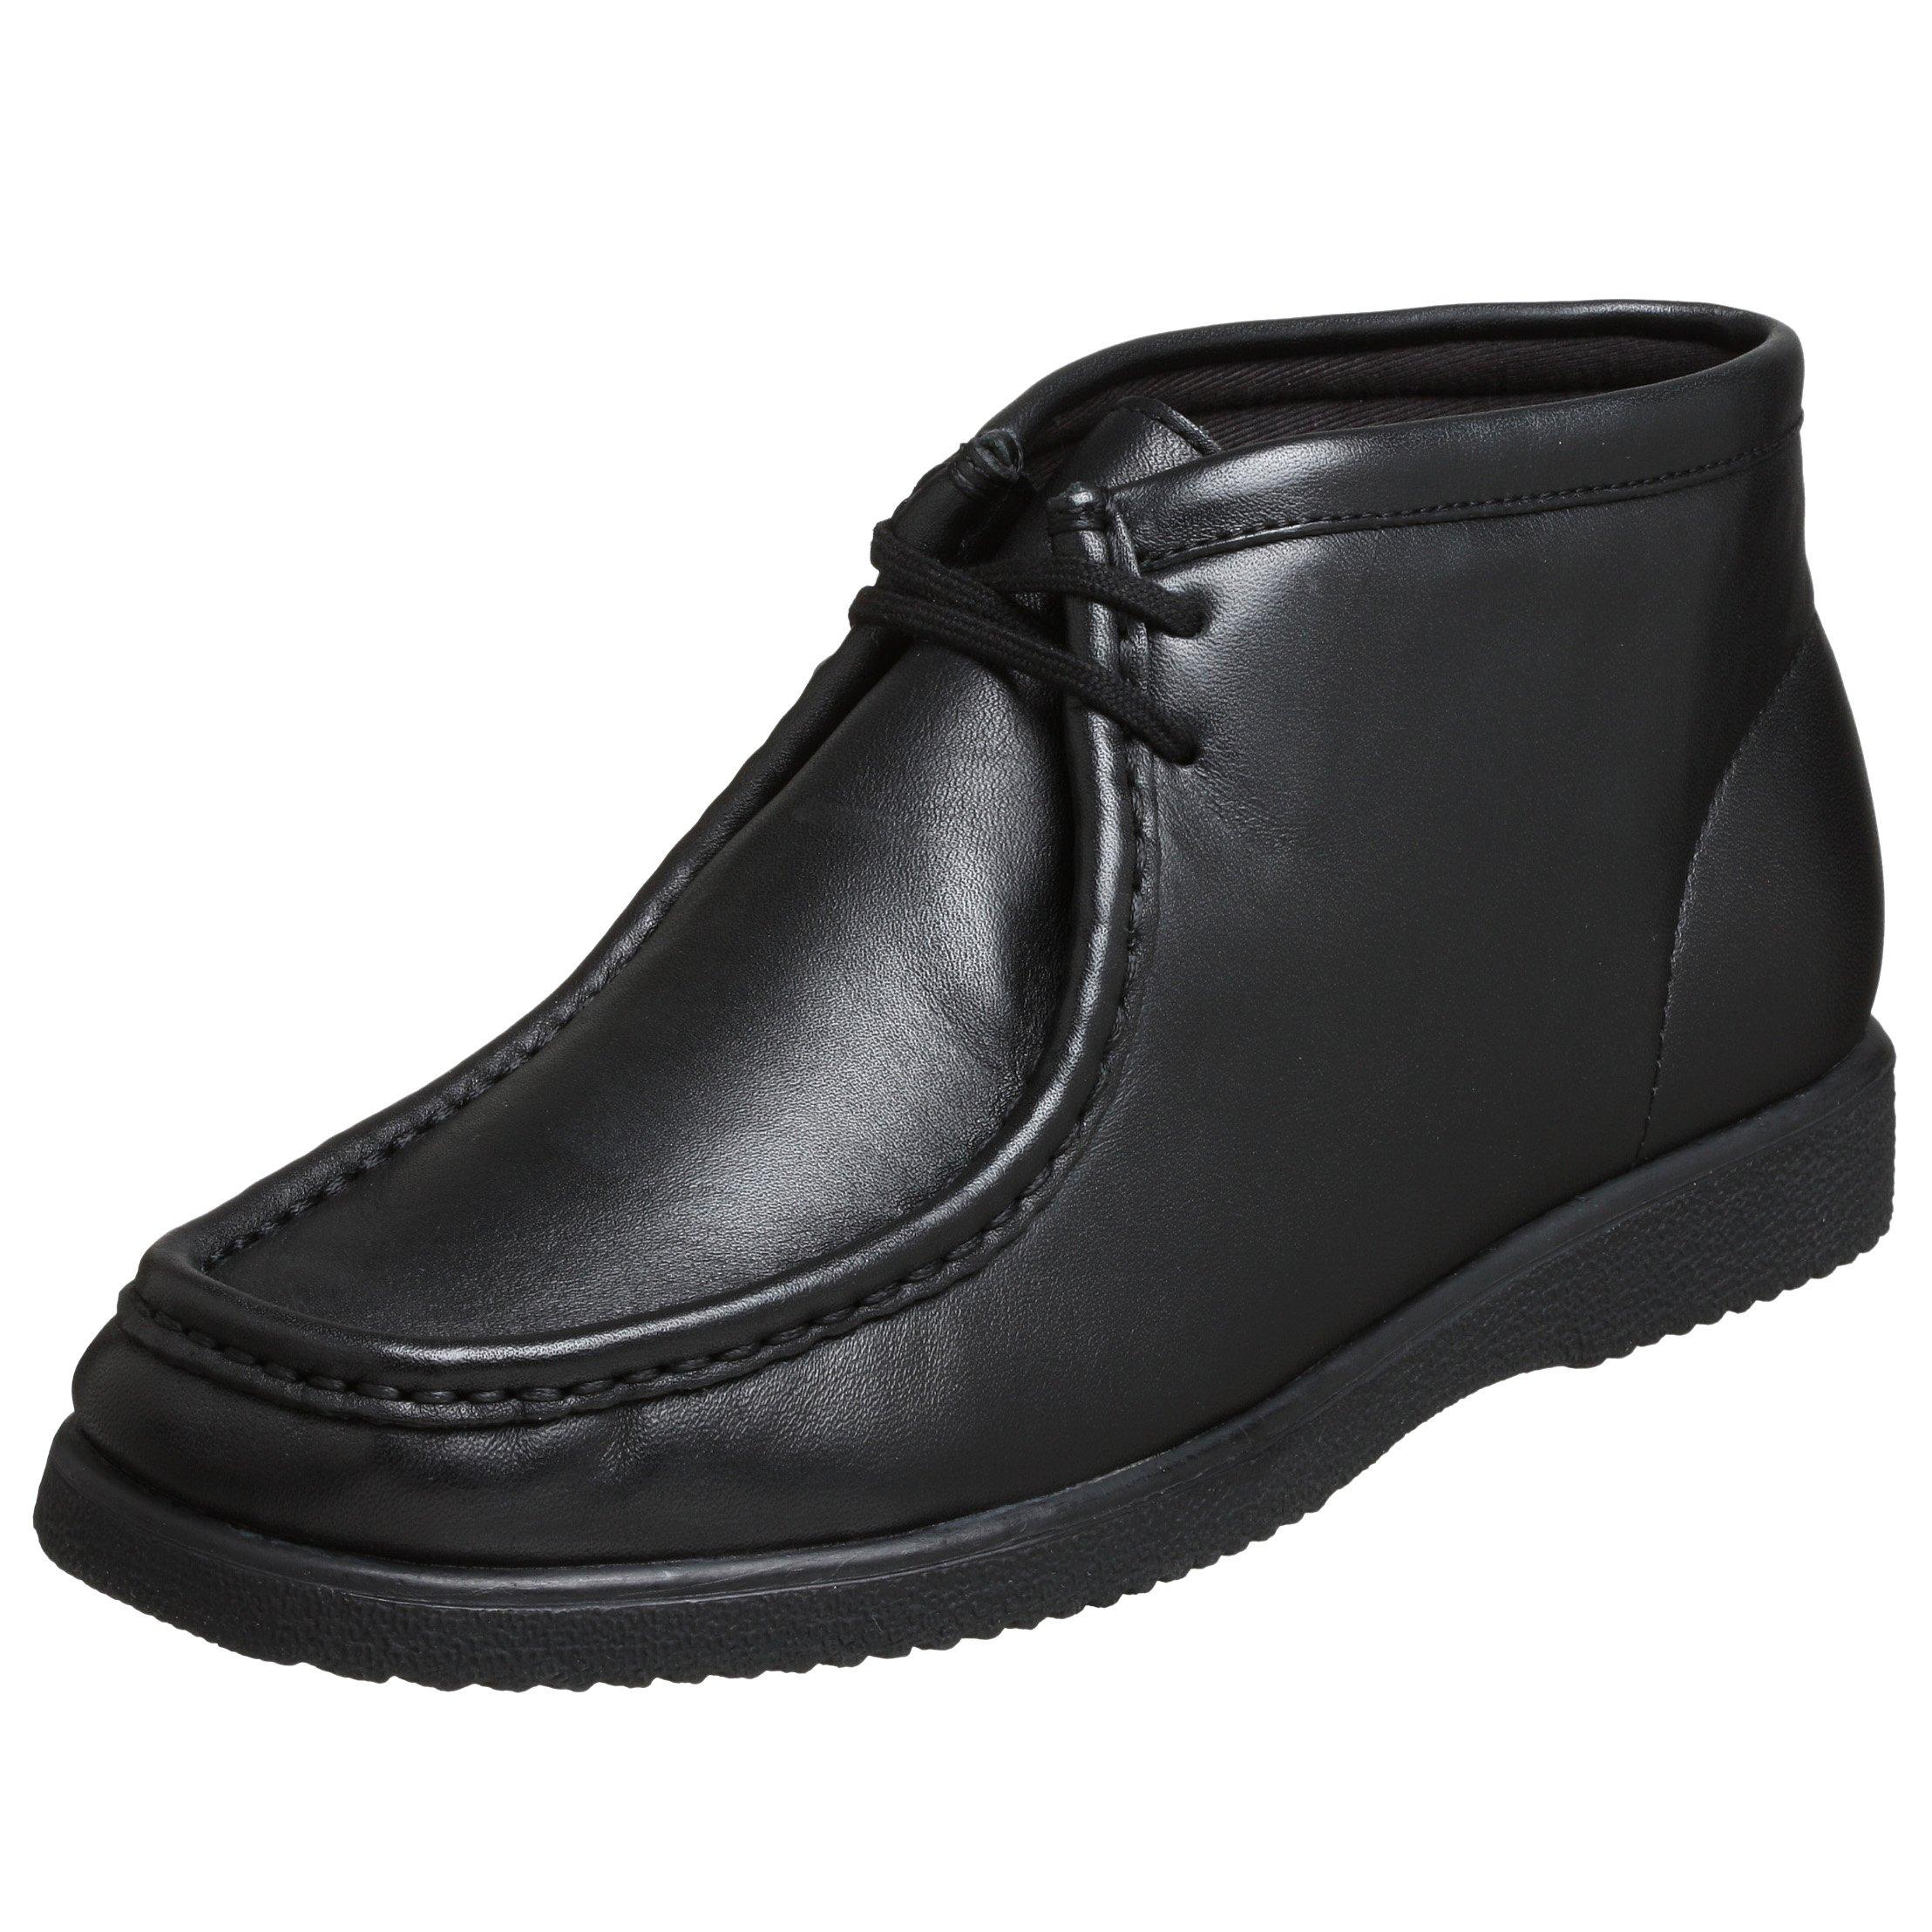 pedal Skat Uluru Hush Puppies Bridgeport Boot,black Leather,13 M Us for Men | Lyst